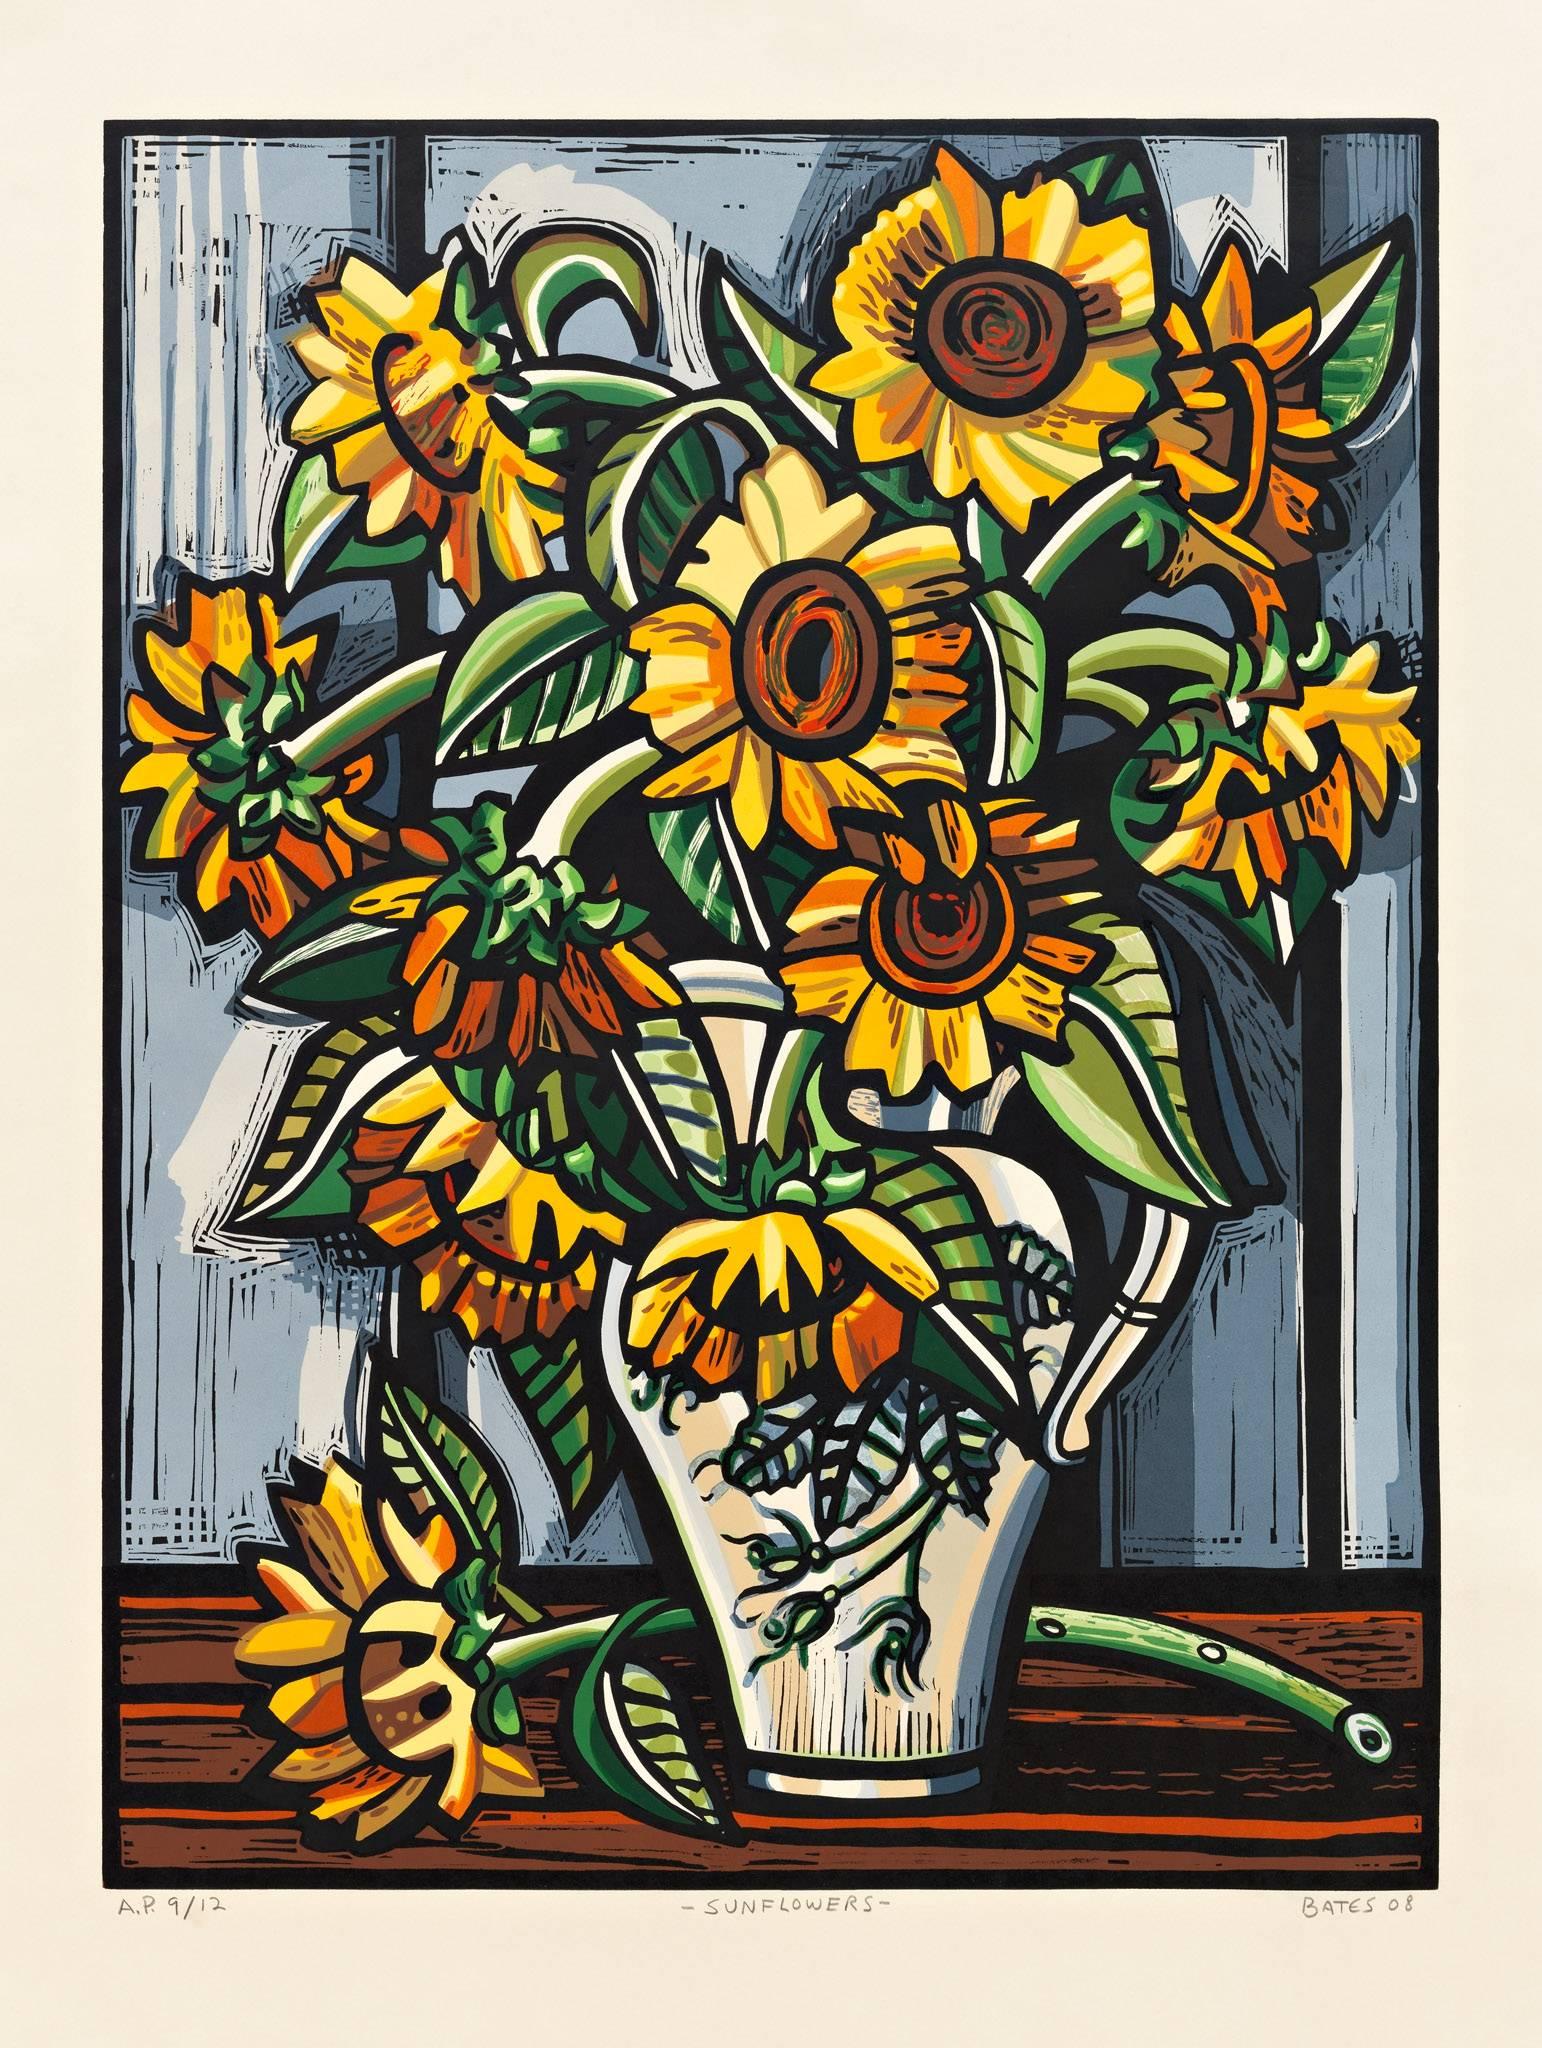 Sunflowers - Print by David Bates b.1952